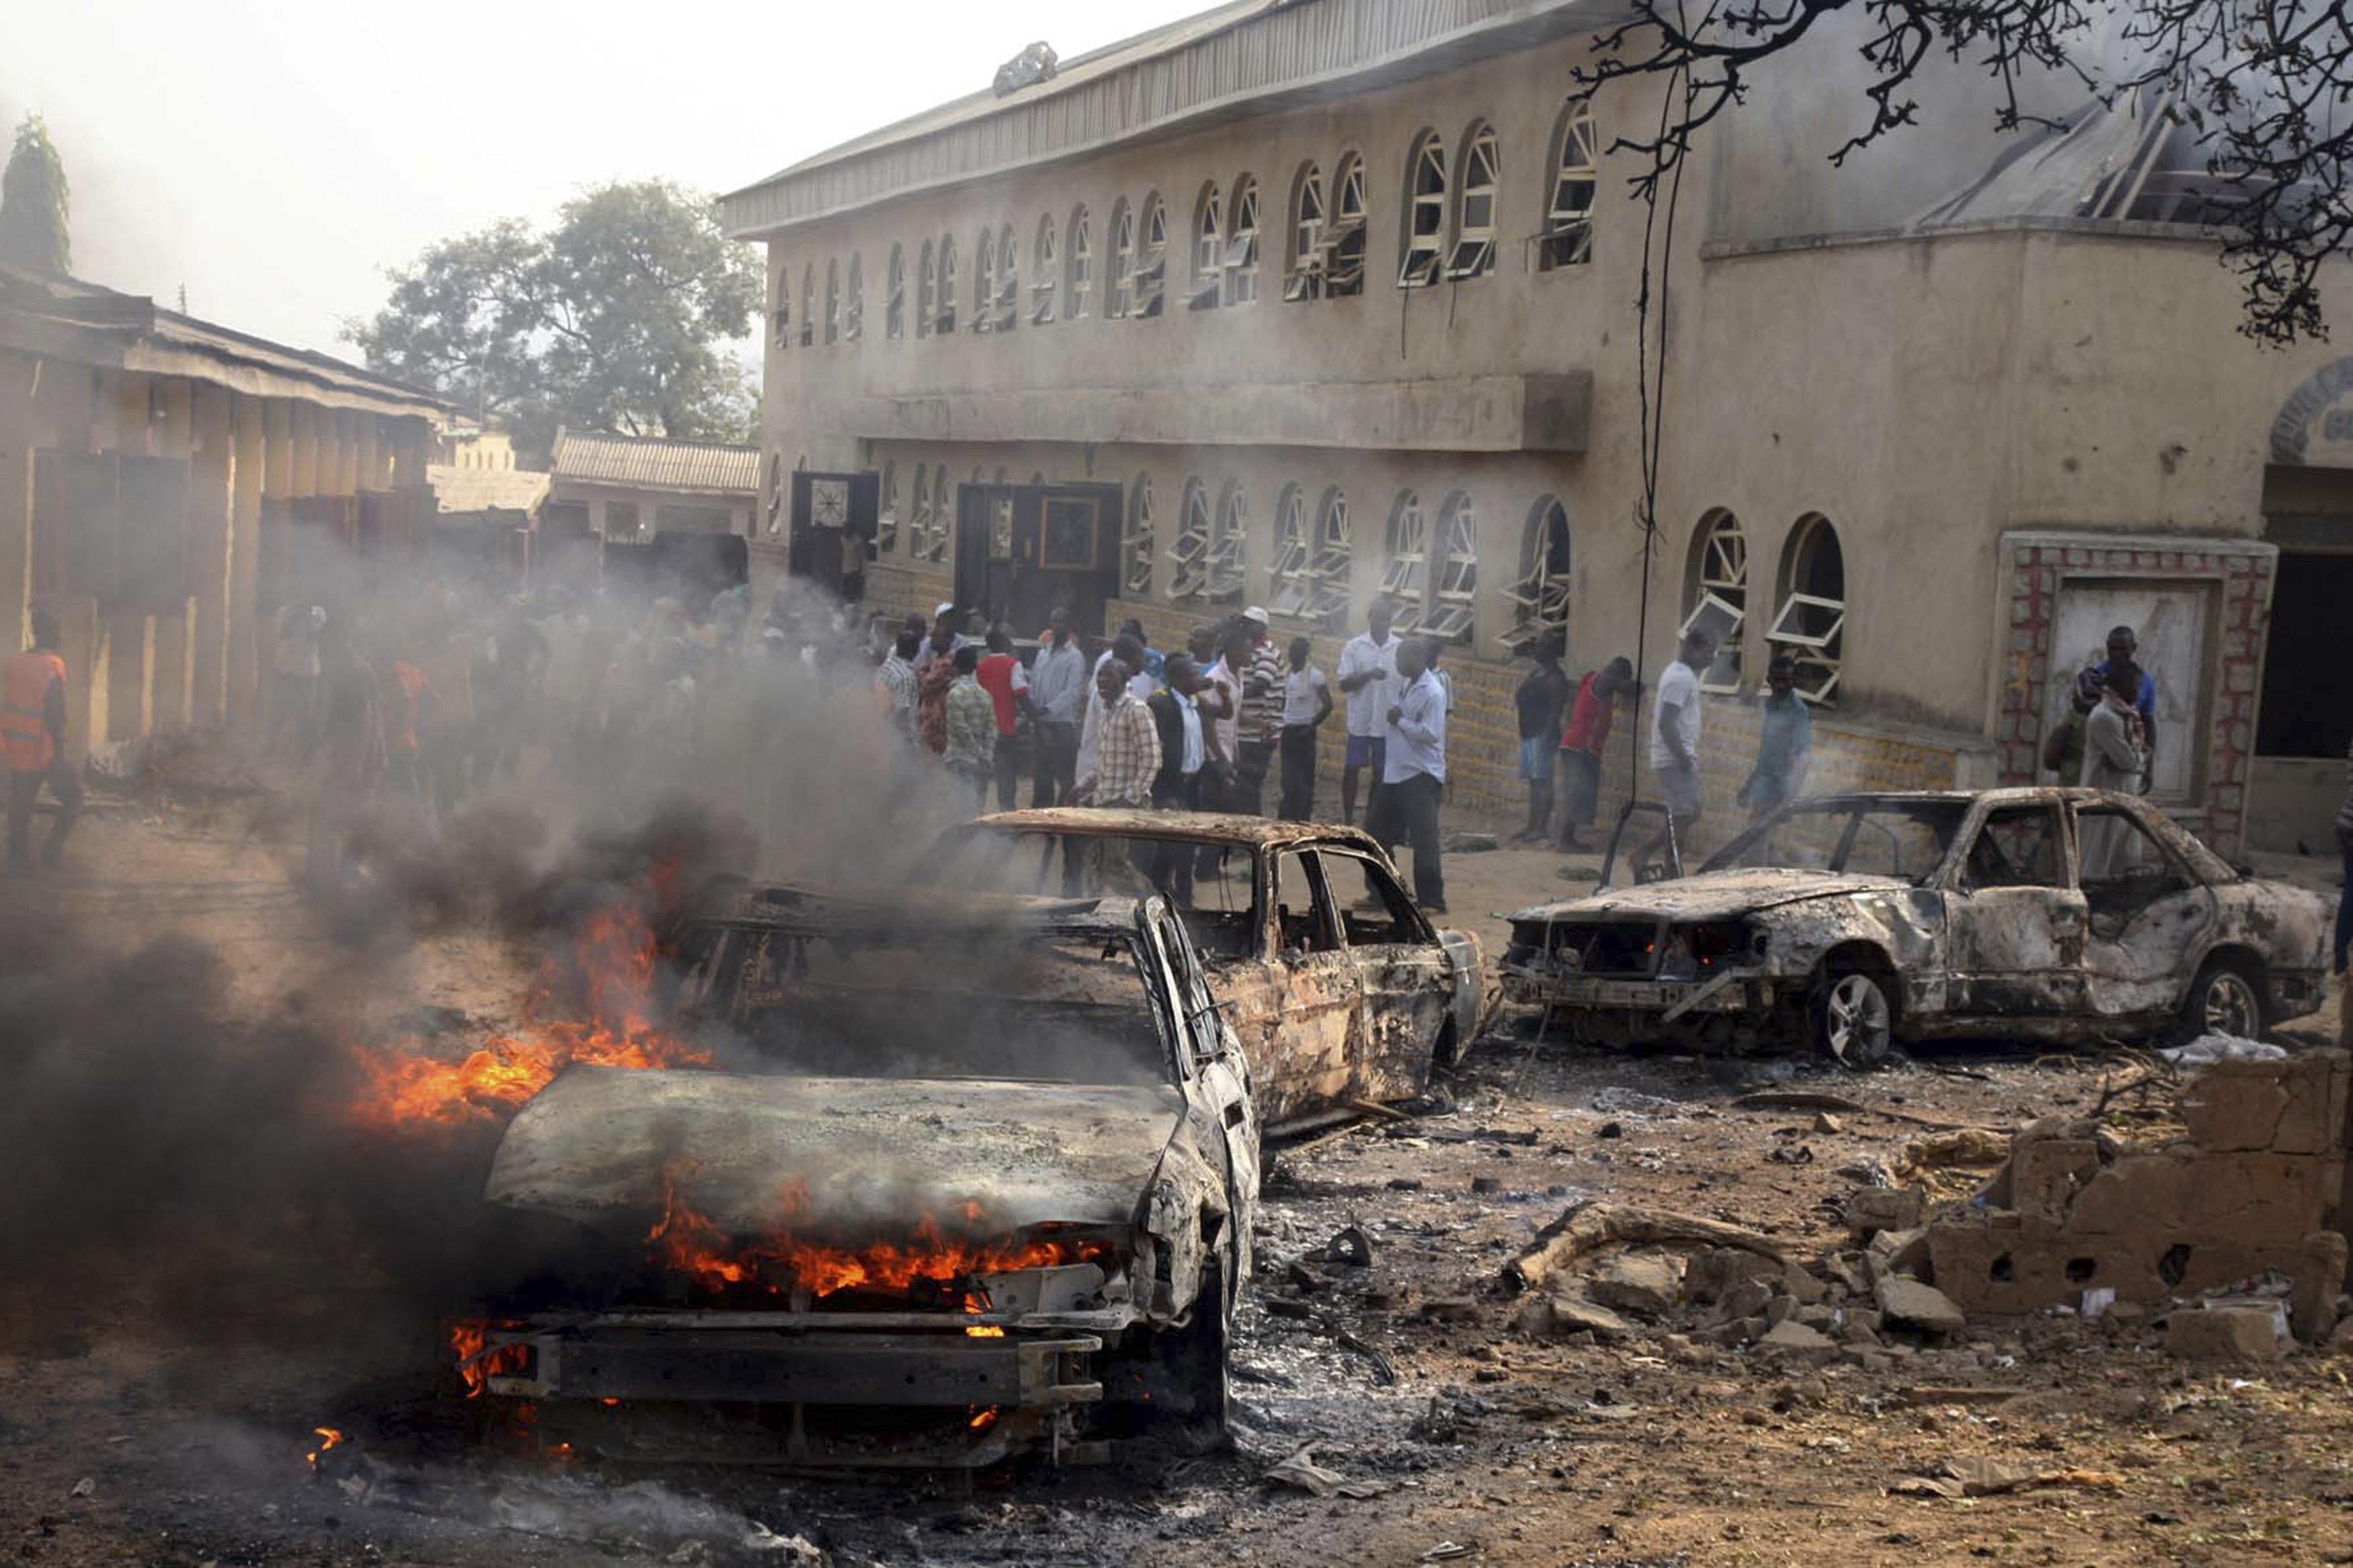 Теракт 2014. Атака Боко харам в Нигерии 2014. Теракт Боко харам в Нигерии. Атака Боко-харам в Нигерии 5-6 мая 2014. Атака Боко харам в Нигерии 300 погибших.